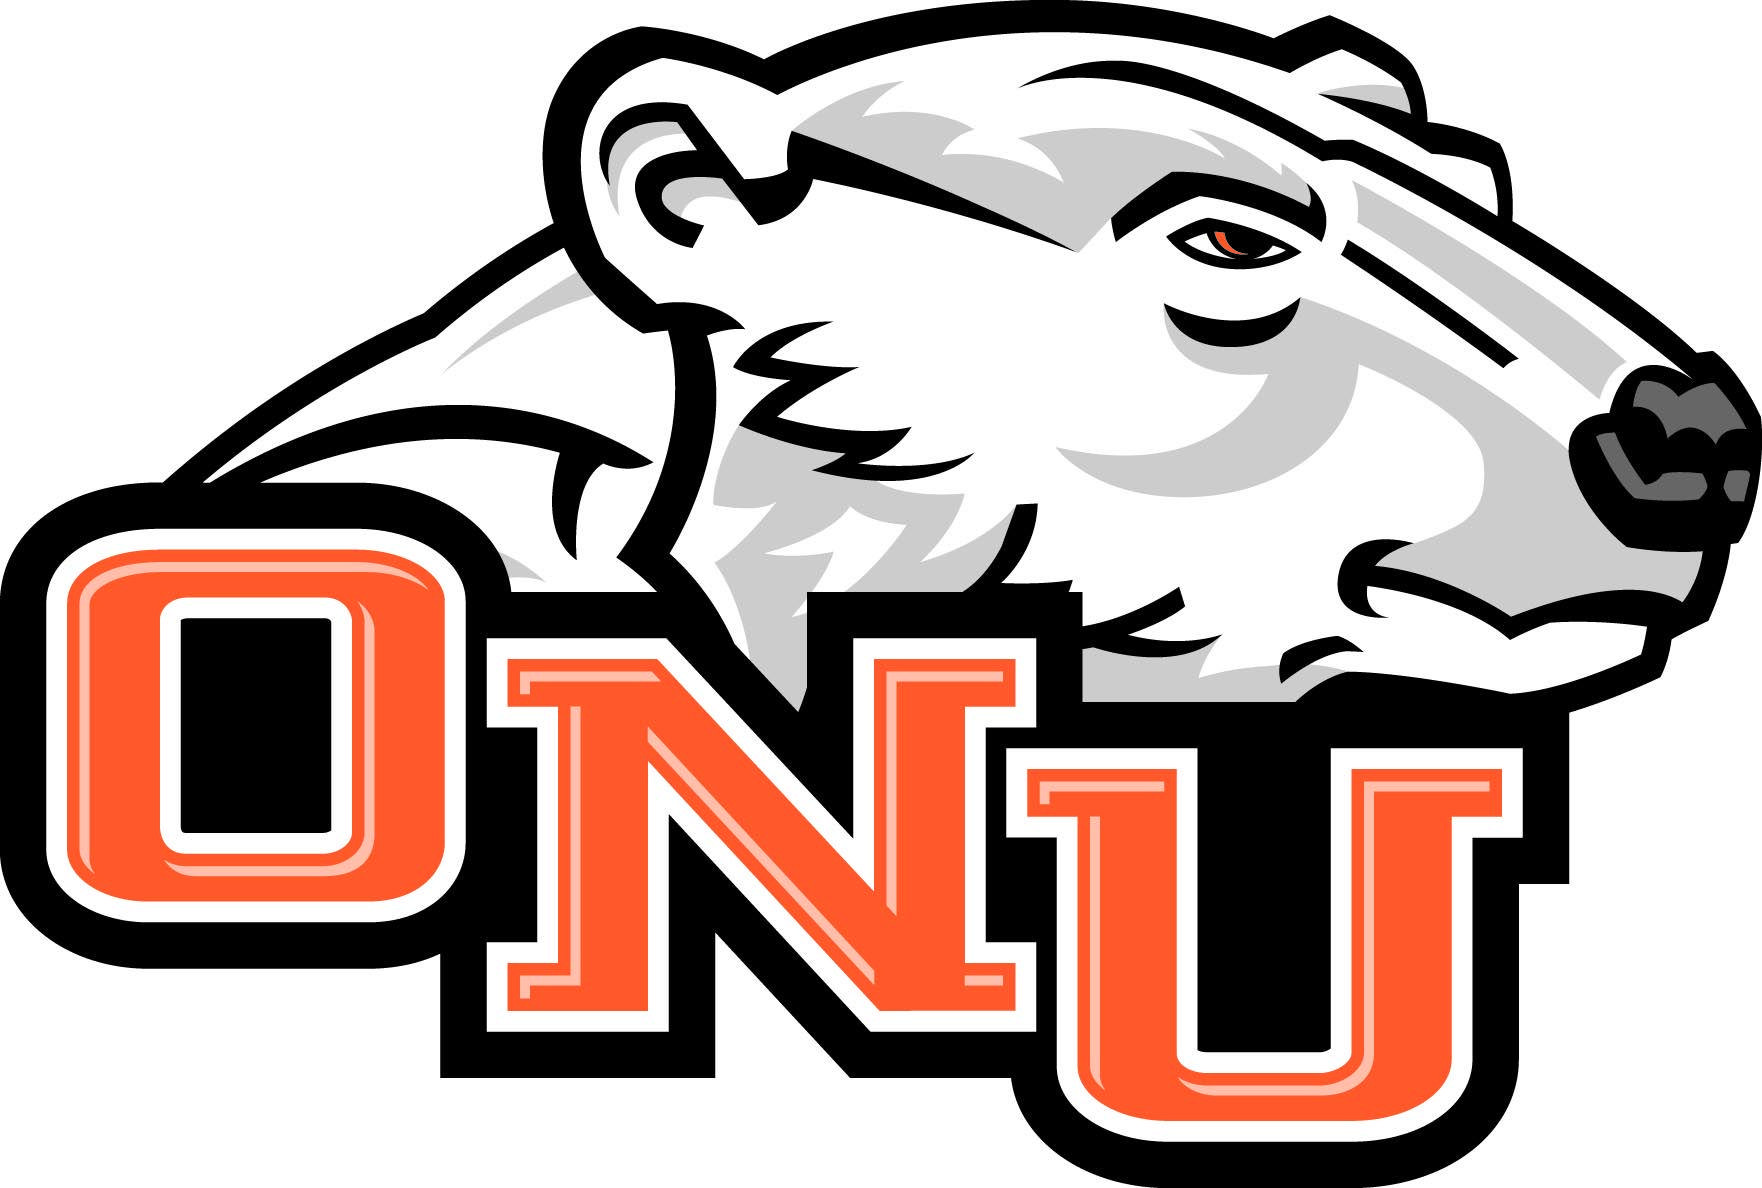 ONU Logo - Official ONU Logos | Ohio Northern University